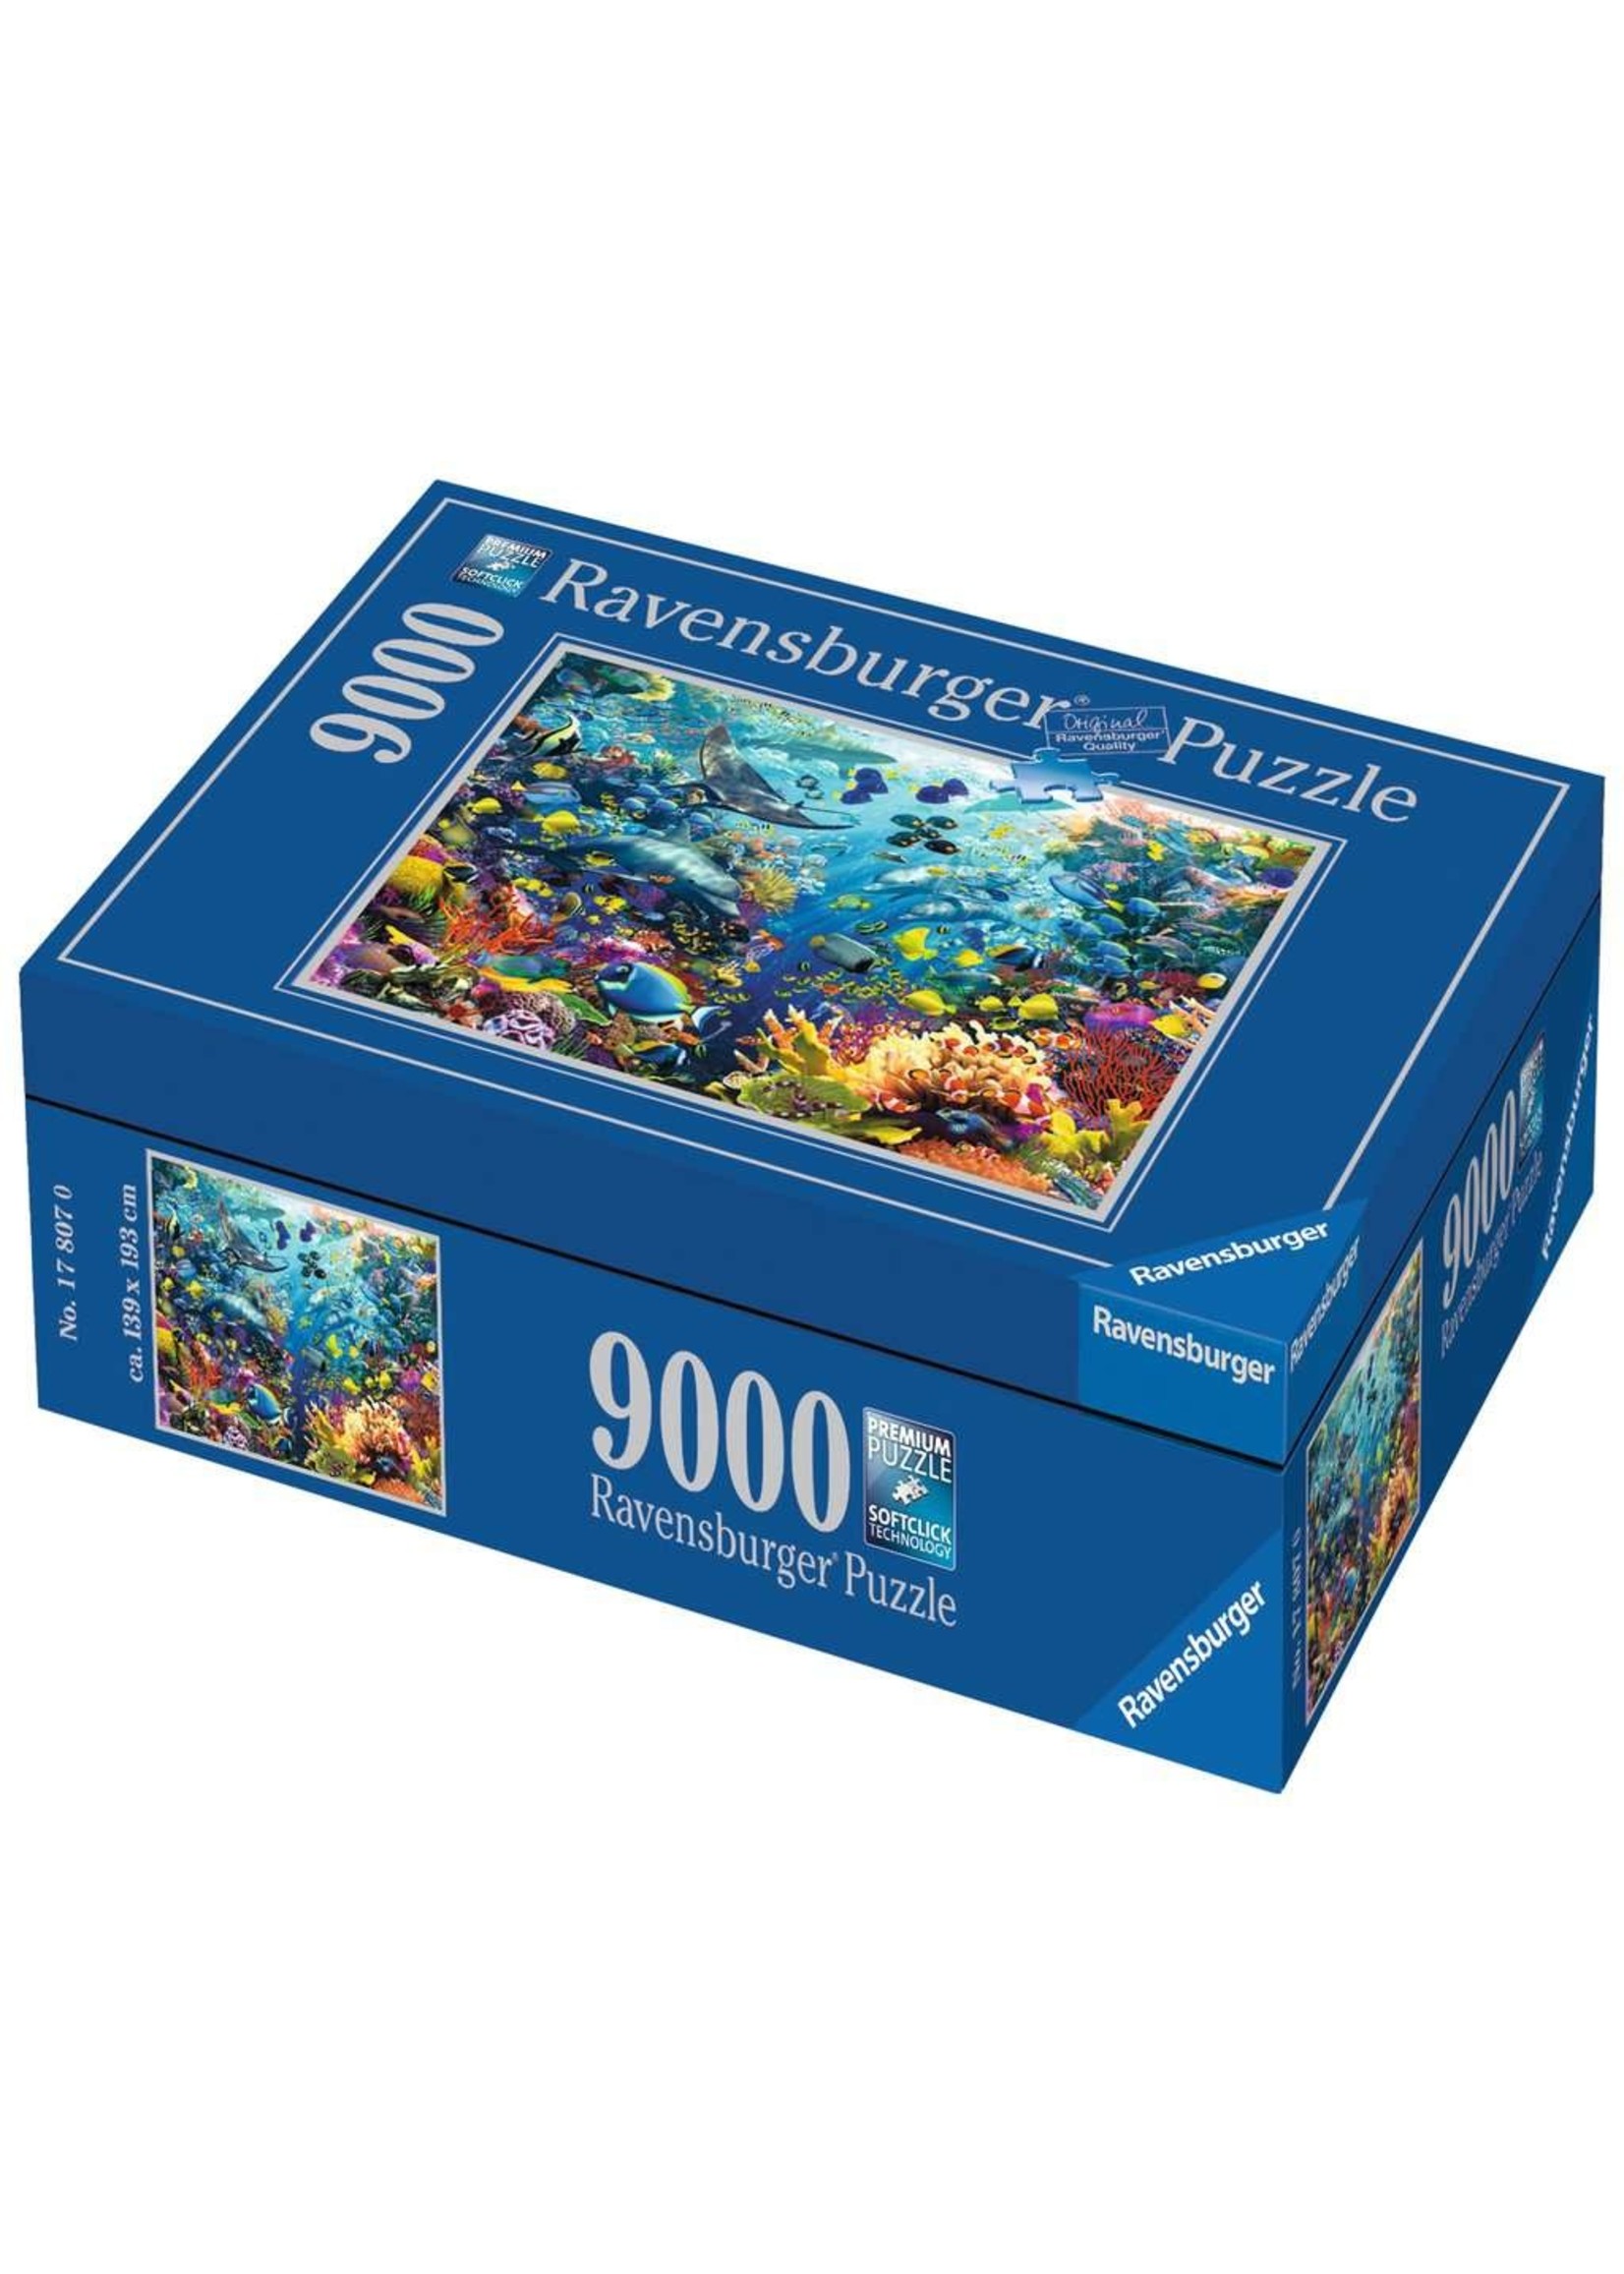 Underwater Paradise 9000